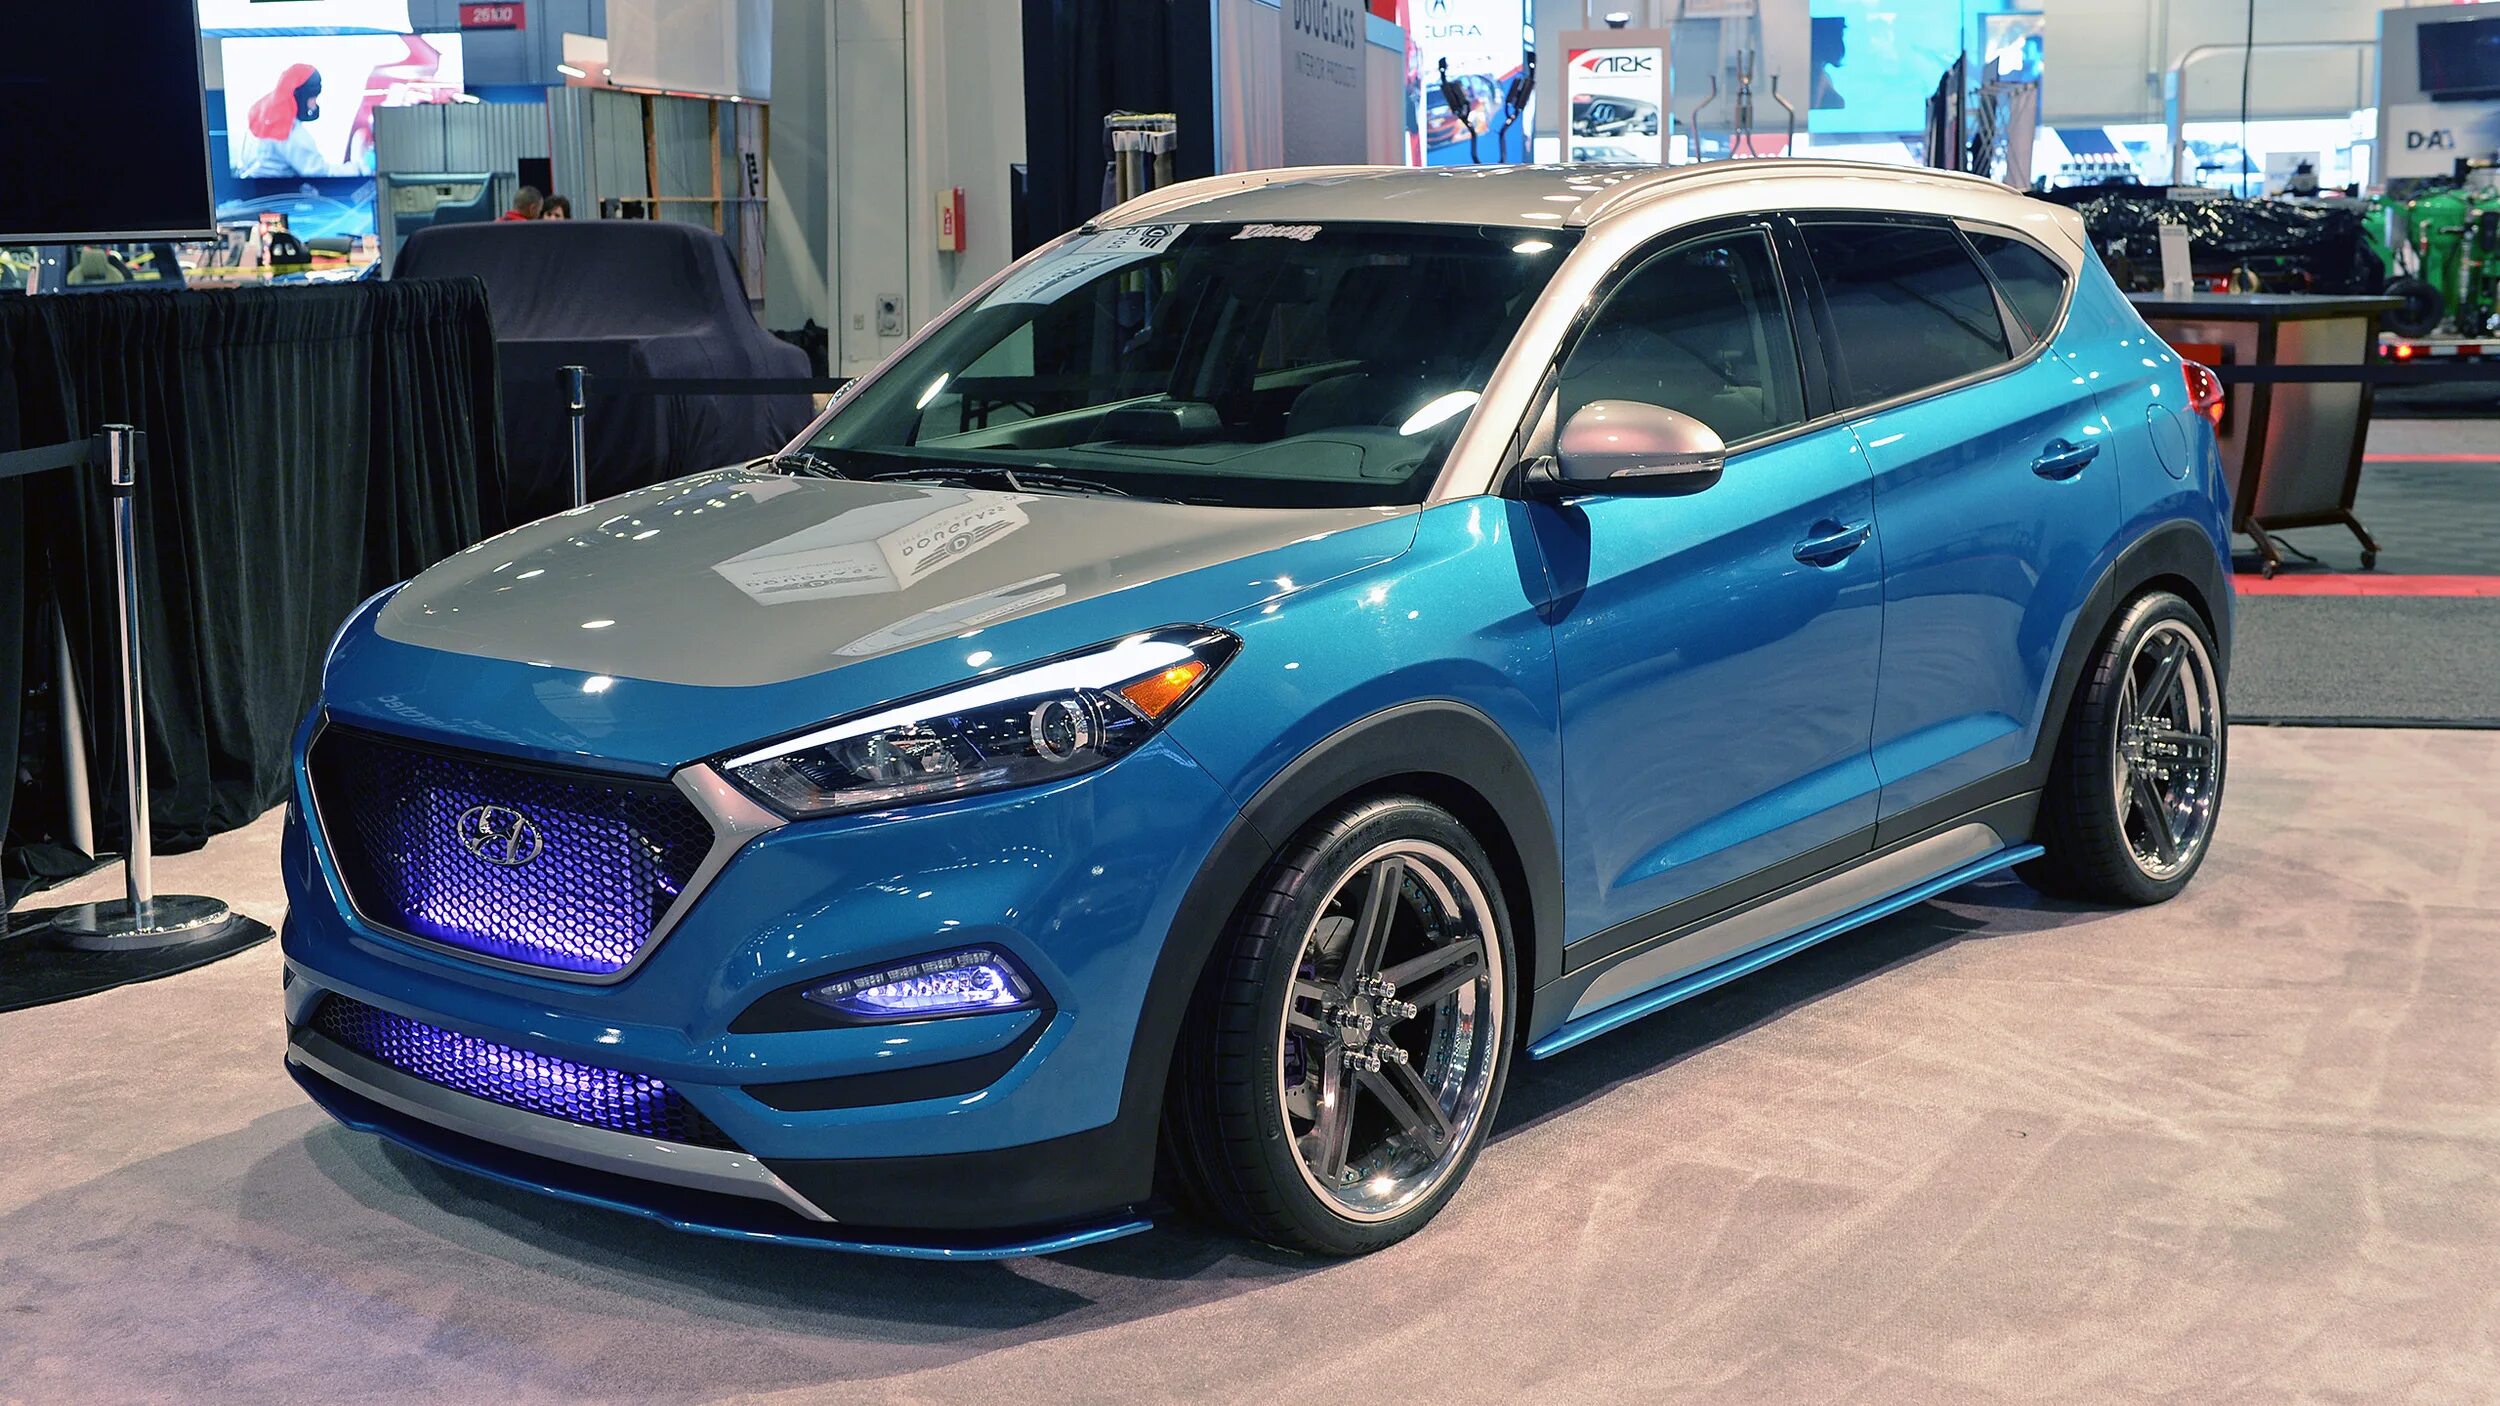 Тюнинг туссана. Hyundai Tucson Tuning 2017. Обвес Hyundai Tucson 2020. Обвес Hyundai Tucson 2019. Hyundai Tucson 2020 Tuning.